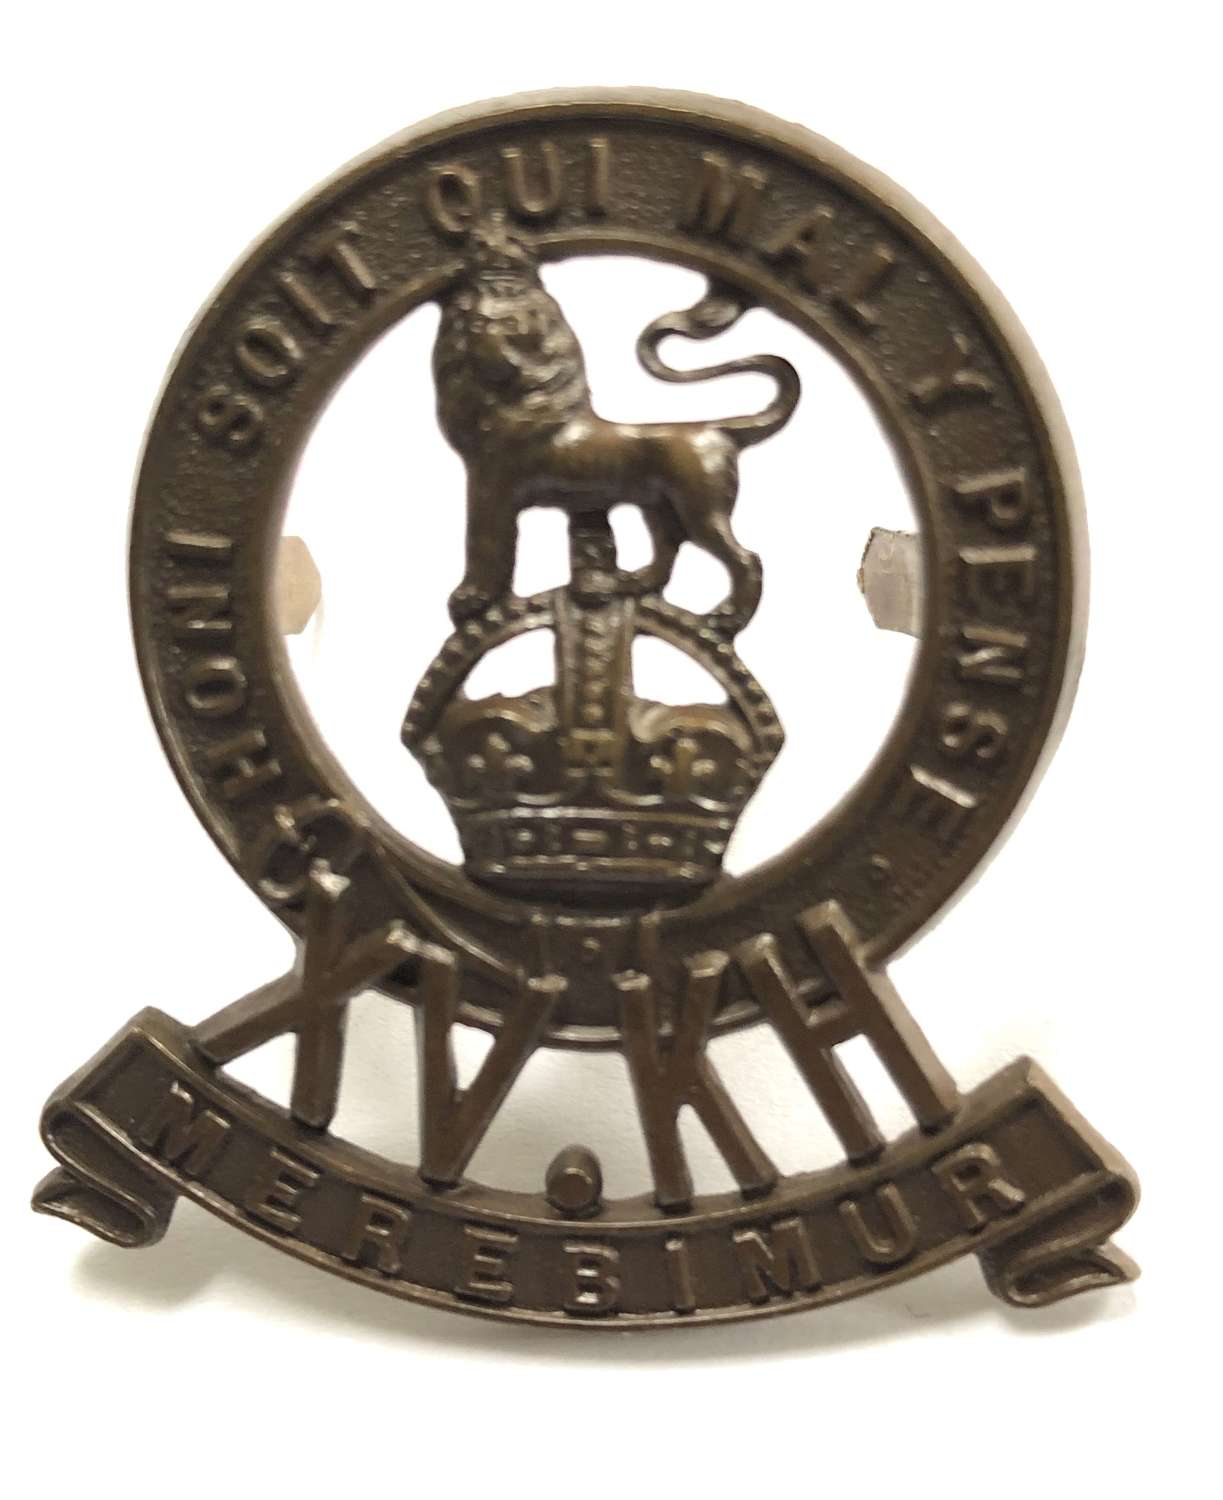 15th King’s Hussars OSD bronze cap badge circa 1902-22 by Gaunt